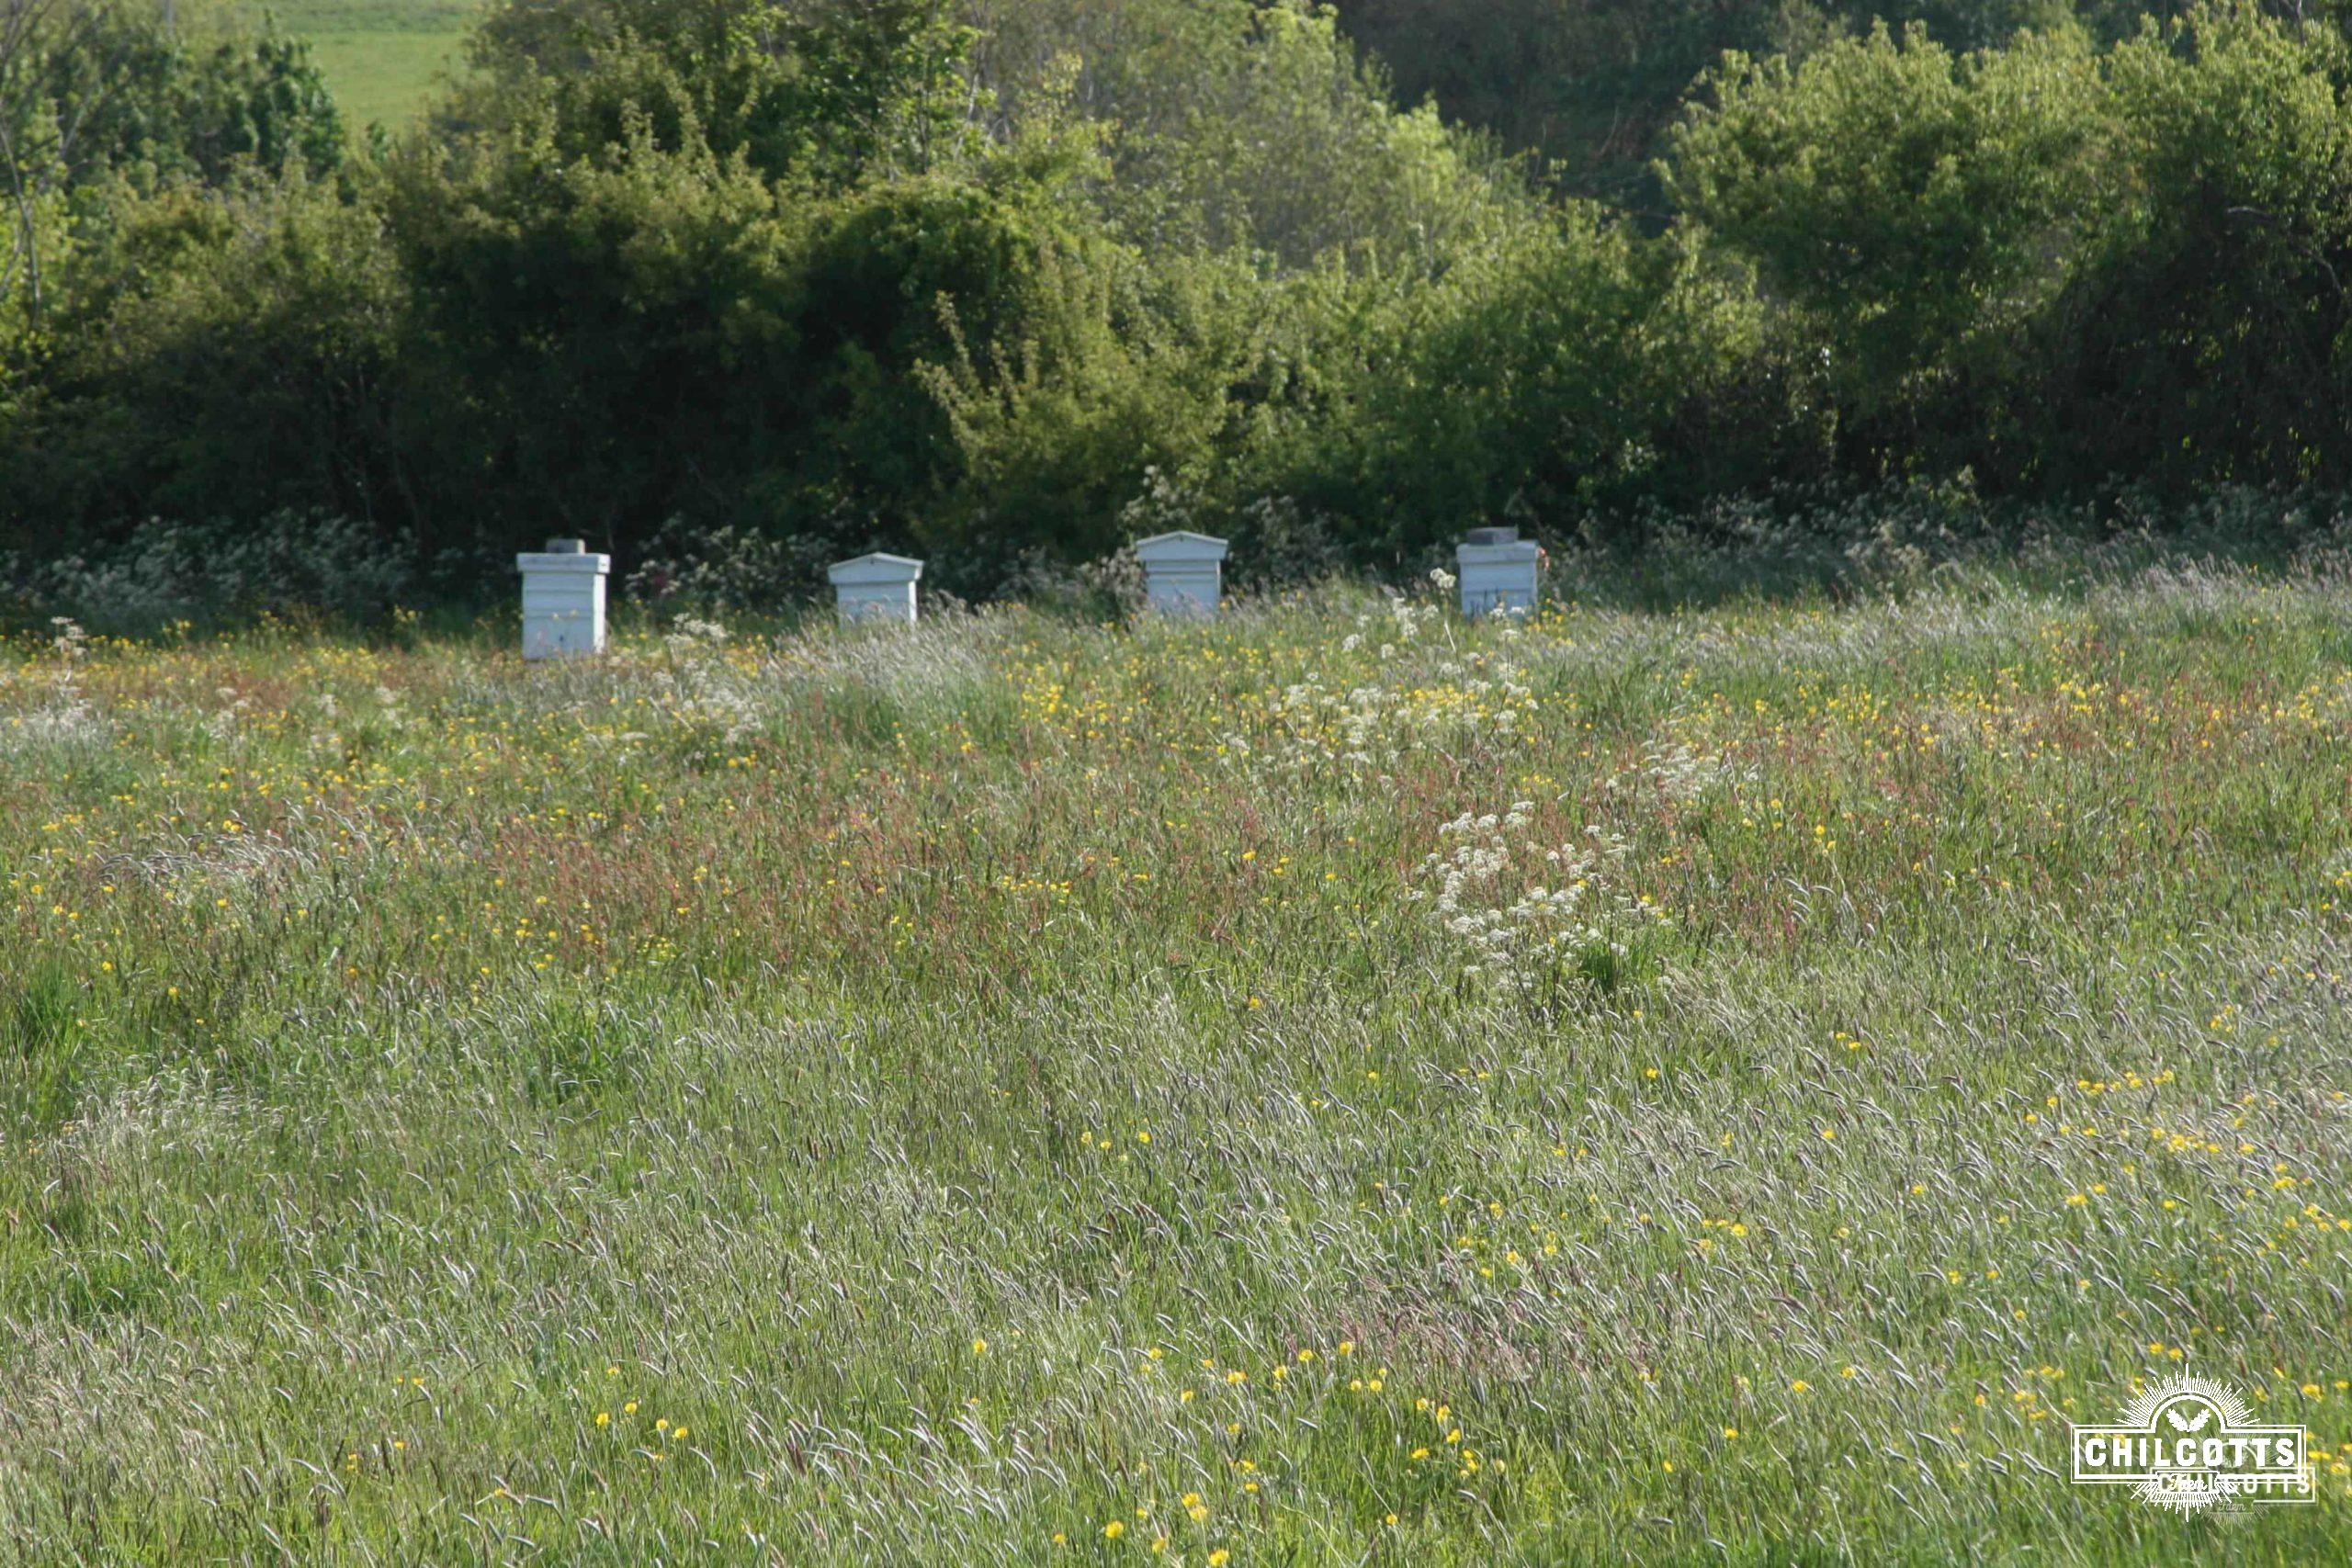 Beehives in field